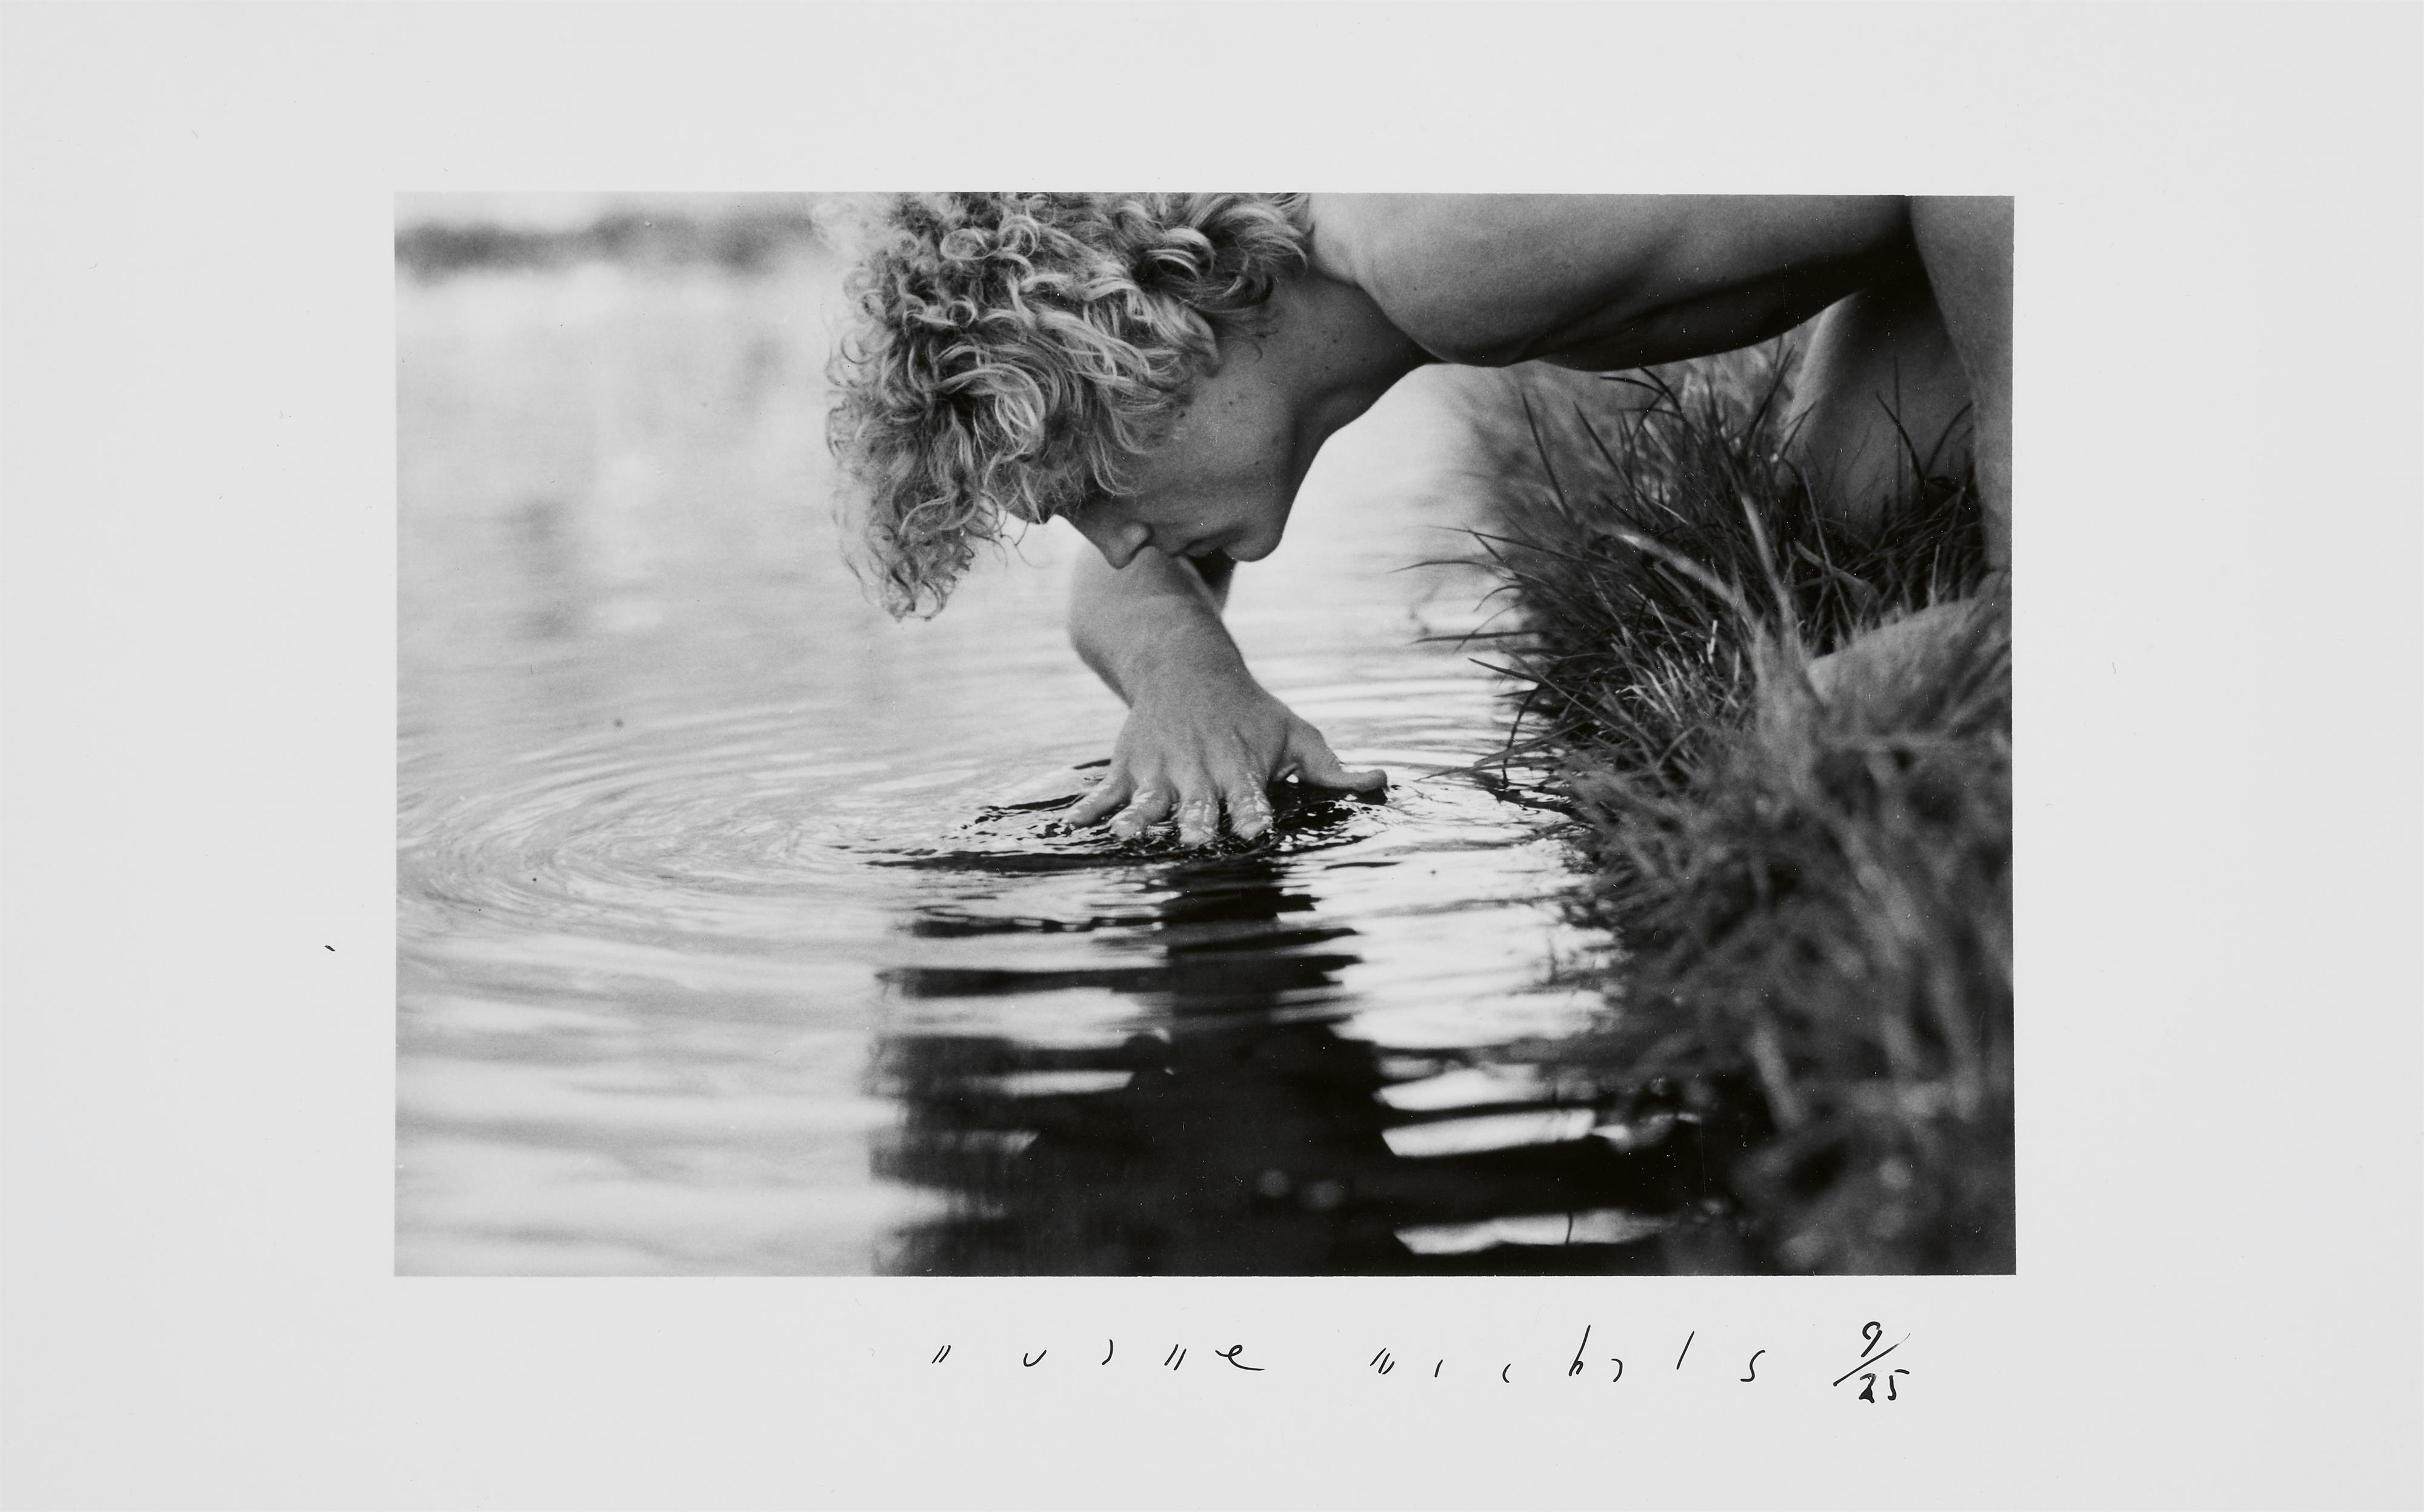 Duane Michals - Narcissus - image-10